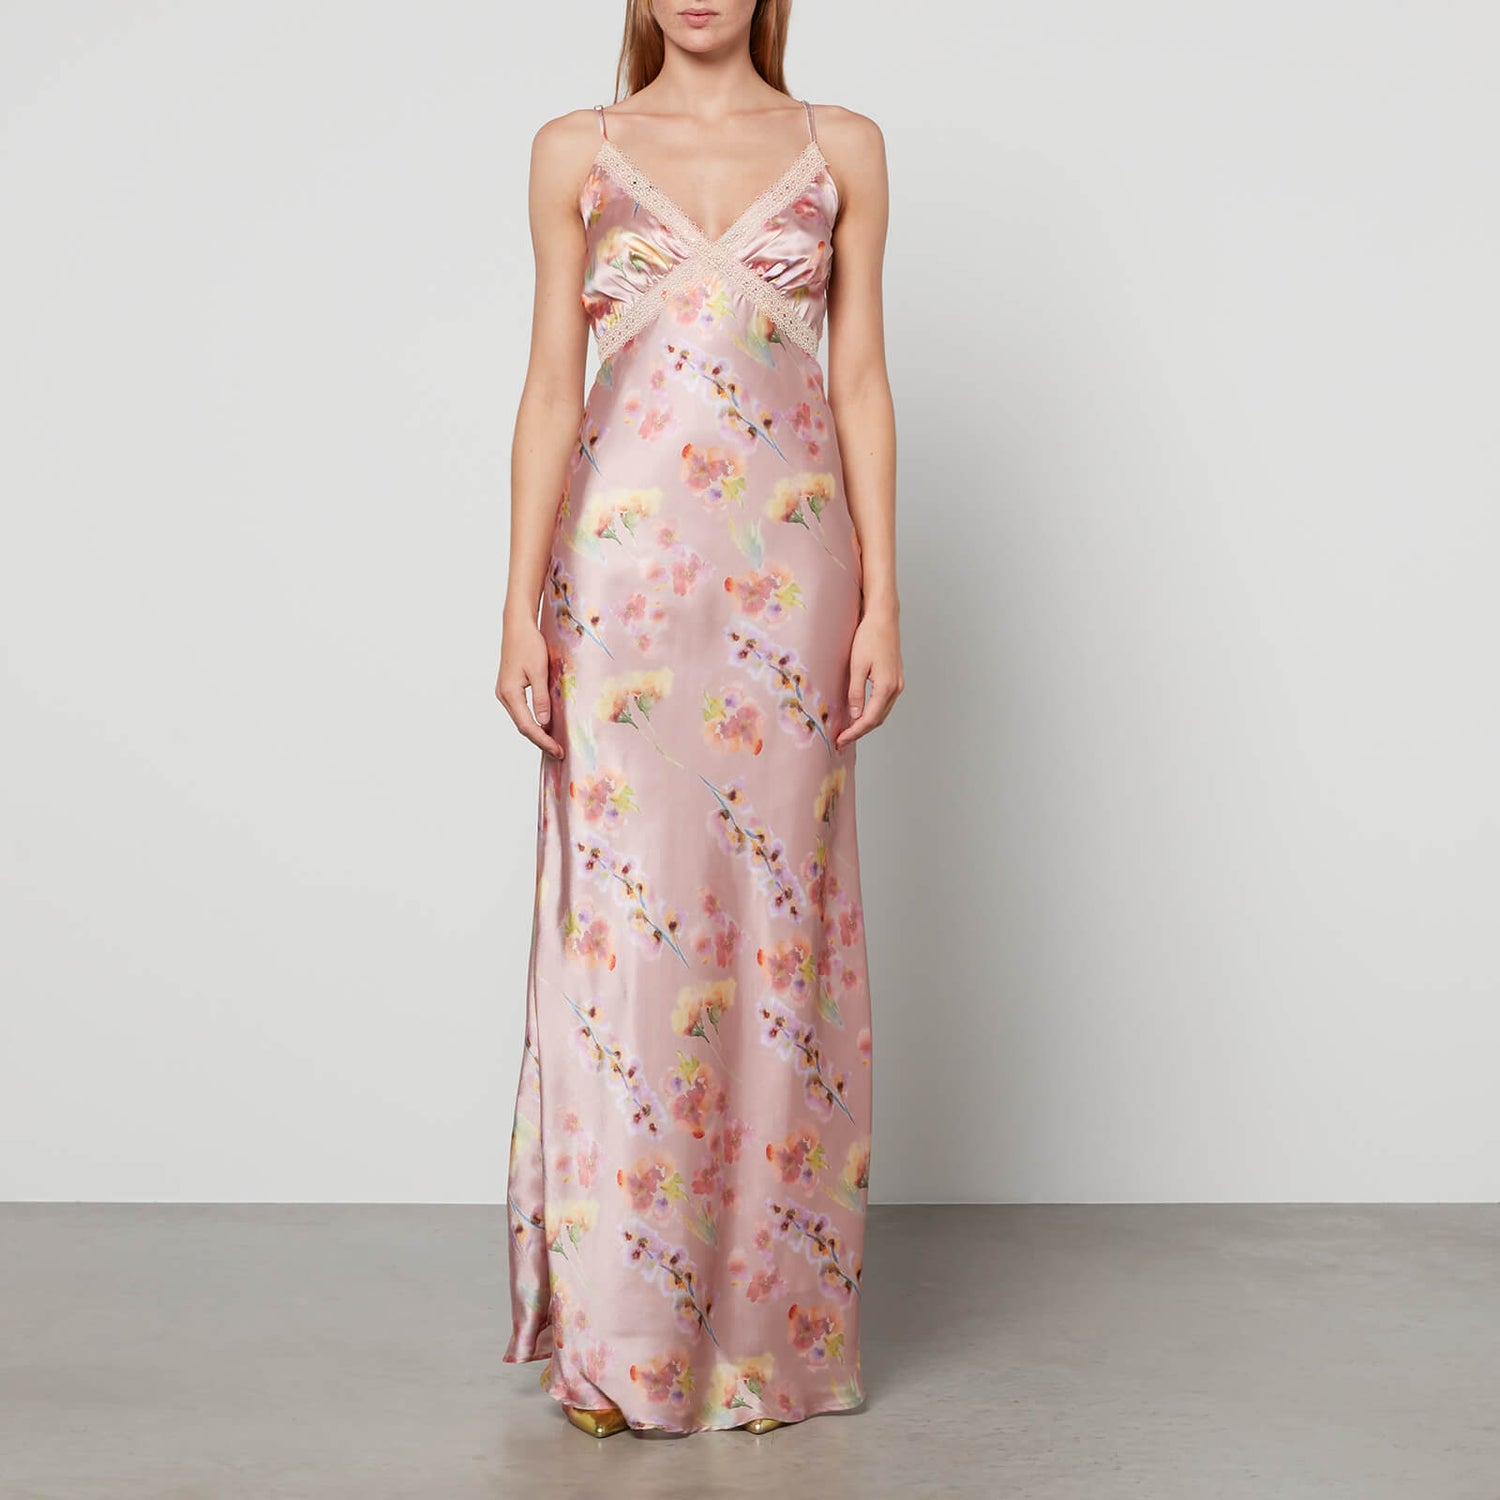 Hope & Ivy Women's Saffron Dress - Pink - UK 10